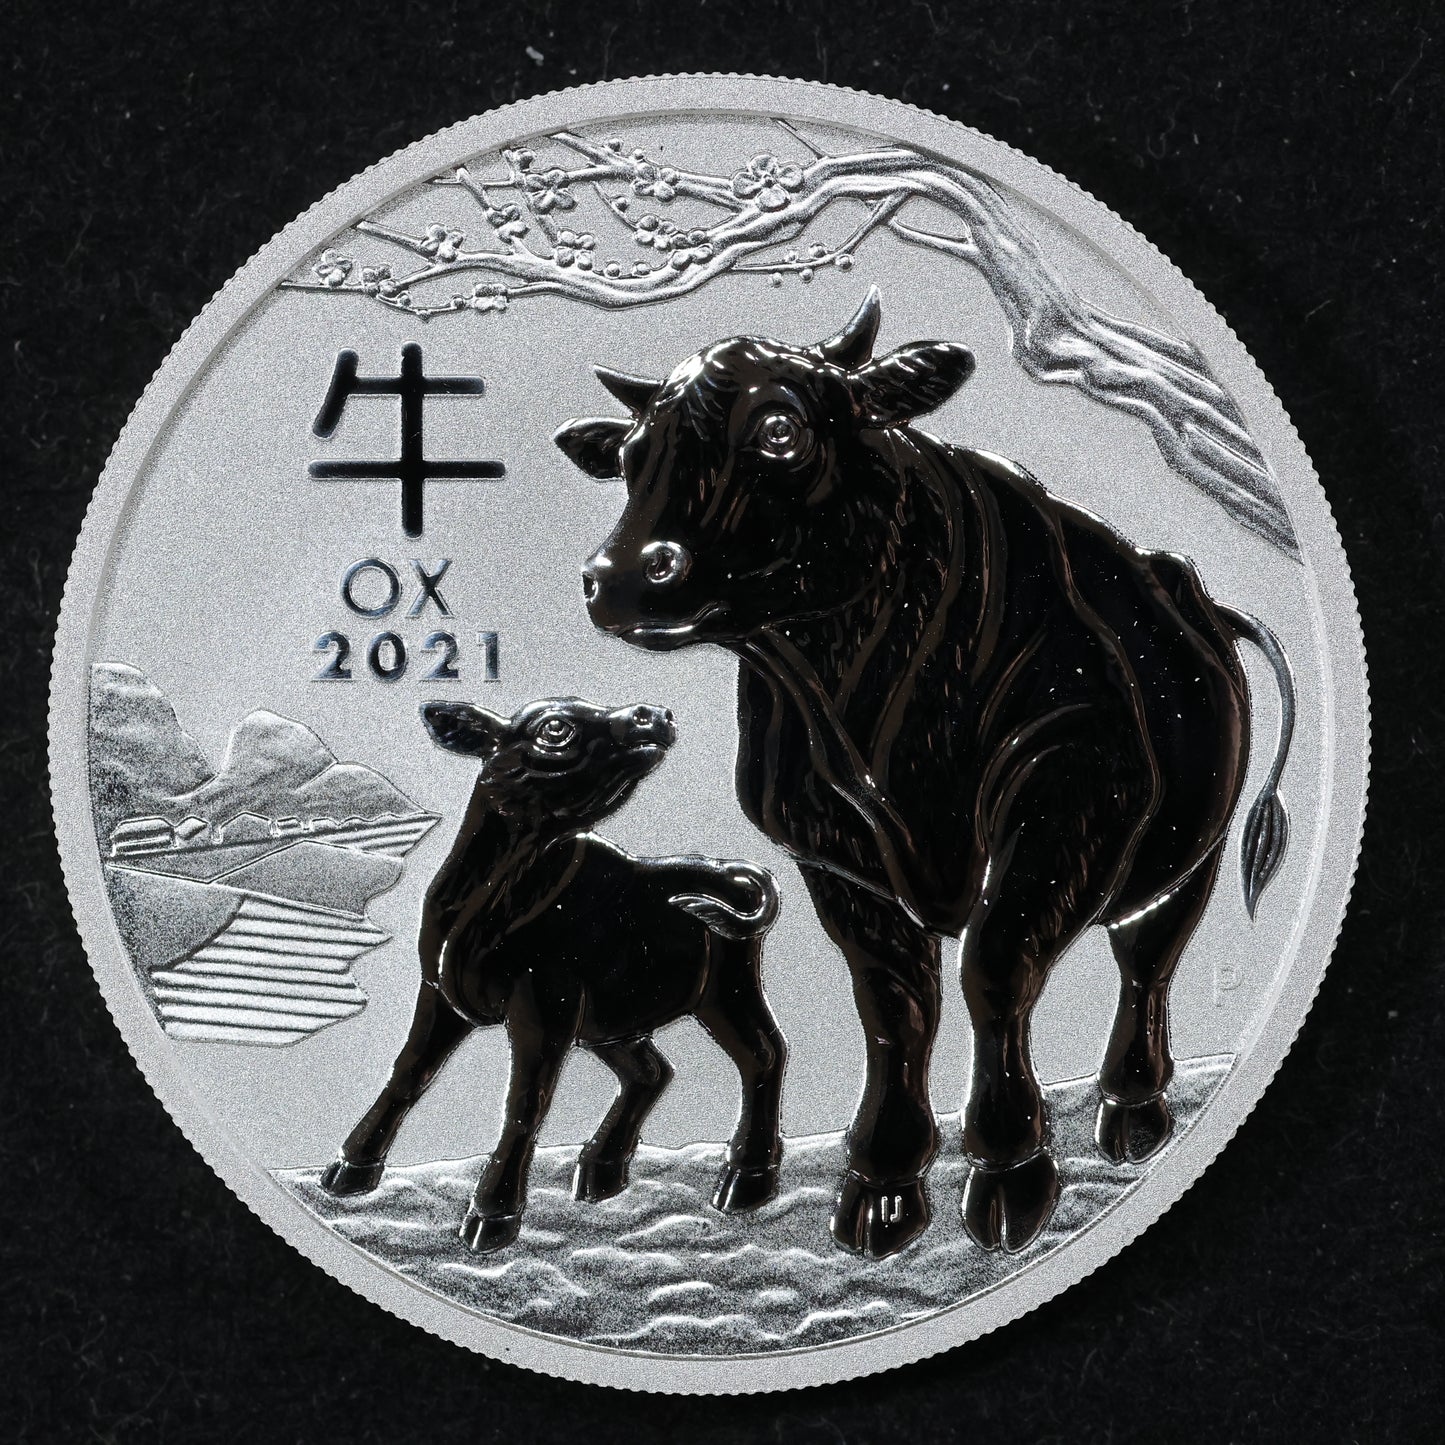 2021 1 oz Silver .9999 Fine Silver Australian Lunar Year of the Ox $1 Coin w/ Capsule